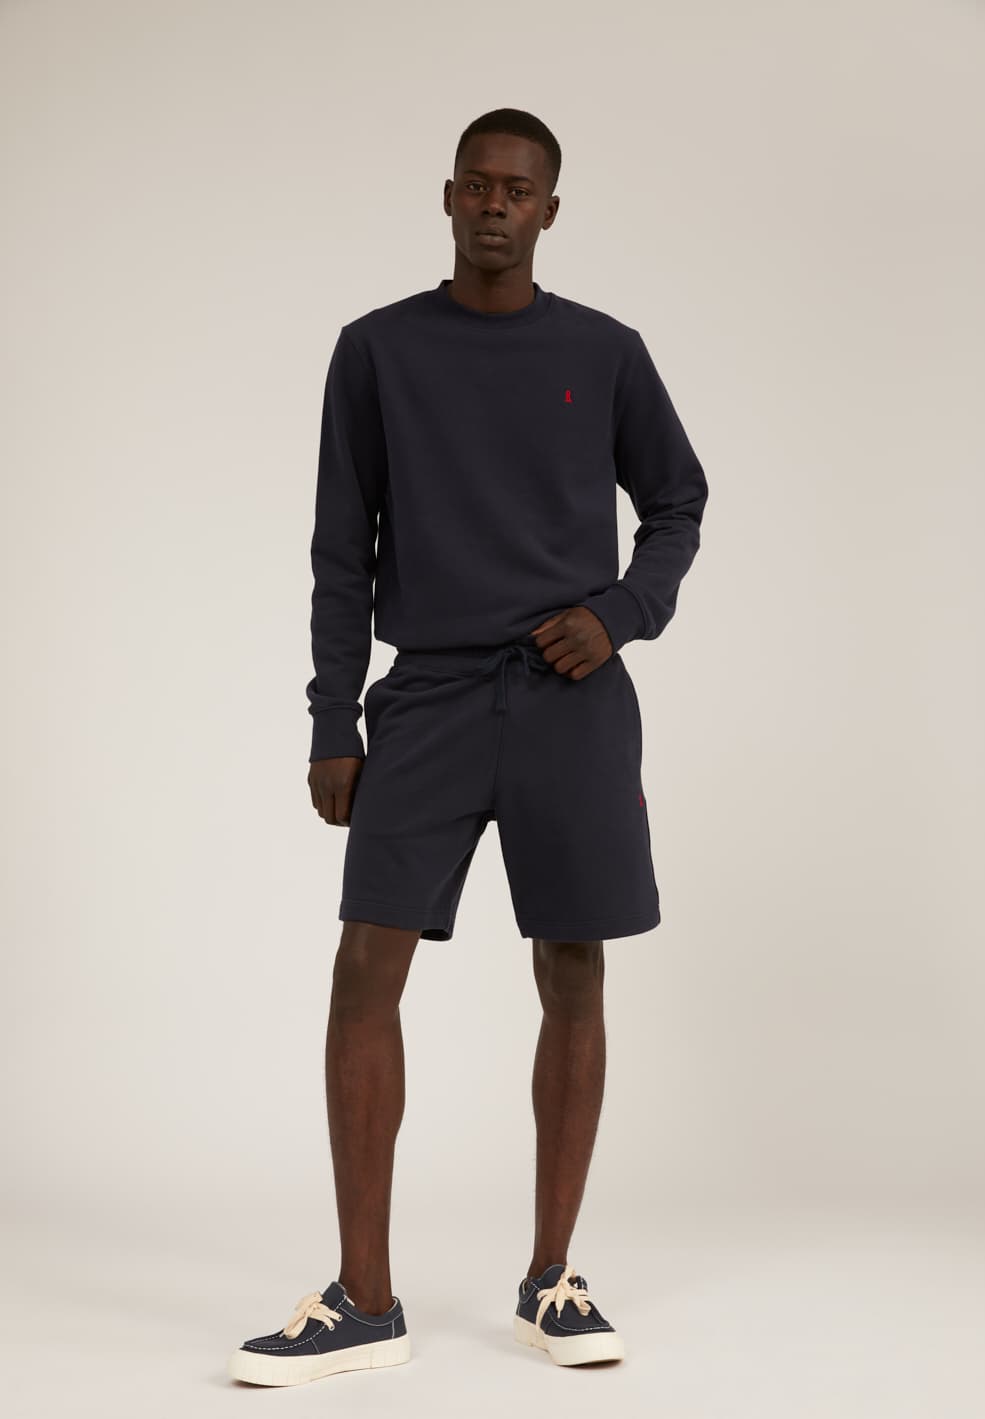 MAARCEL COMFORT Sweat Shorts made of Organic Cotton